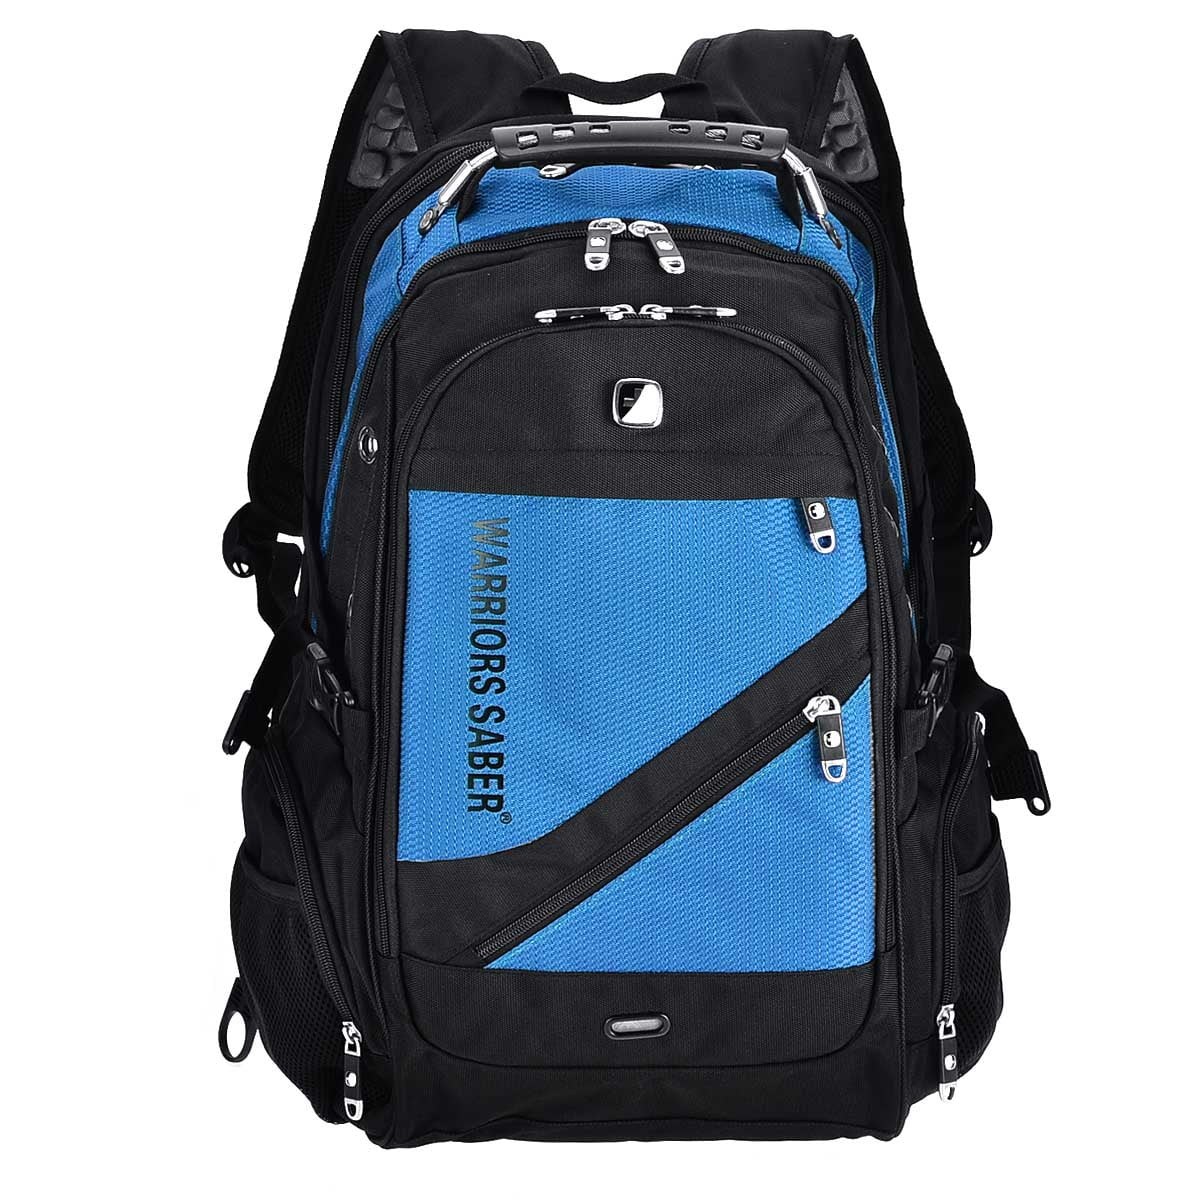 Mountain Bike Travel Laptop Backpack Casual Durable Backpack Daypacks for Men Women for Work Office College Students Business Travel Schoolbag Bookbag